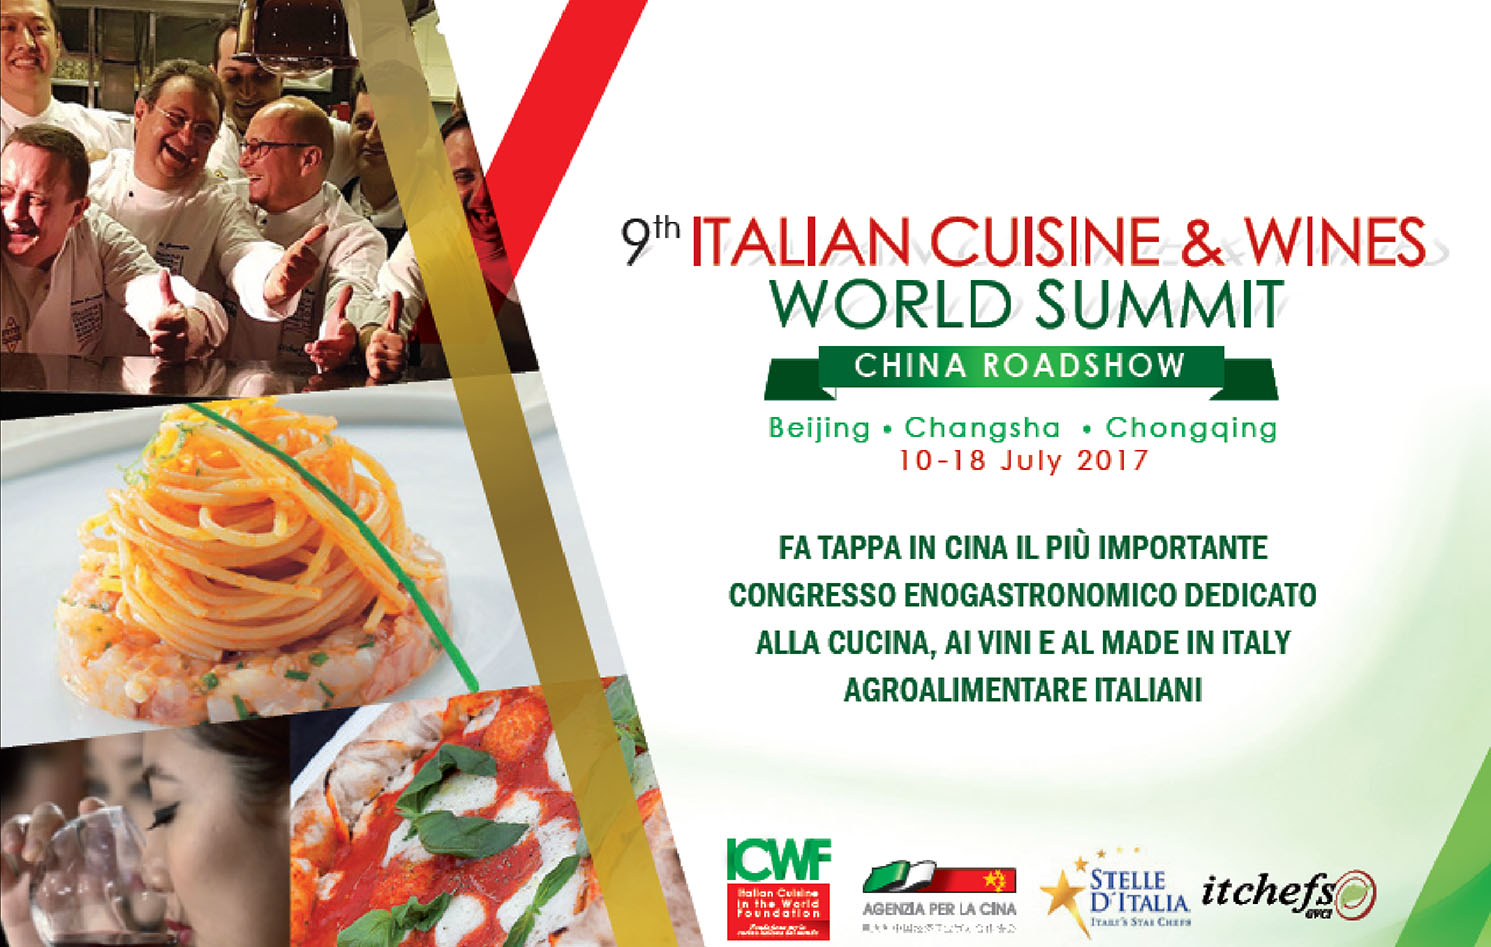 Il 9° Italian Cuisine World Summit fa tappa in Cina